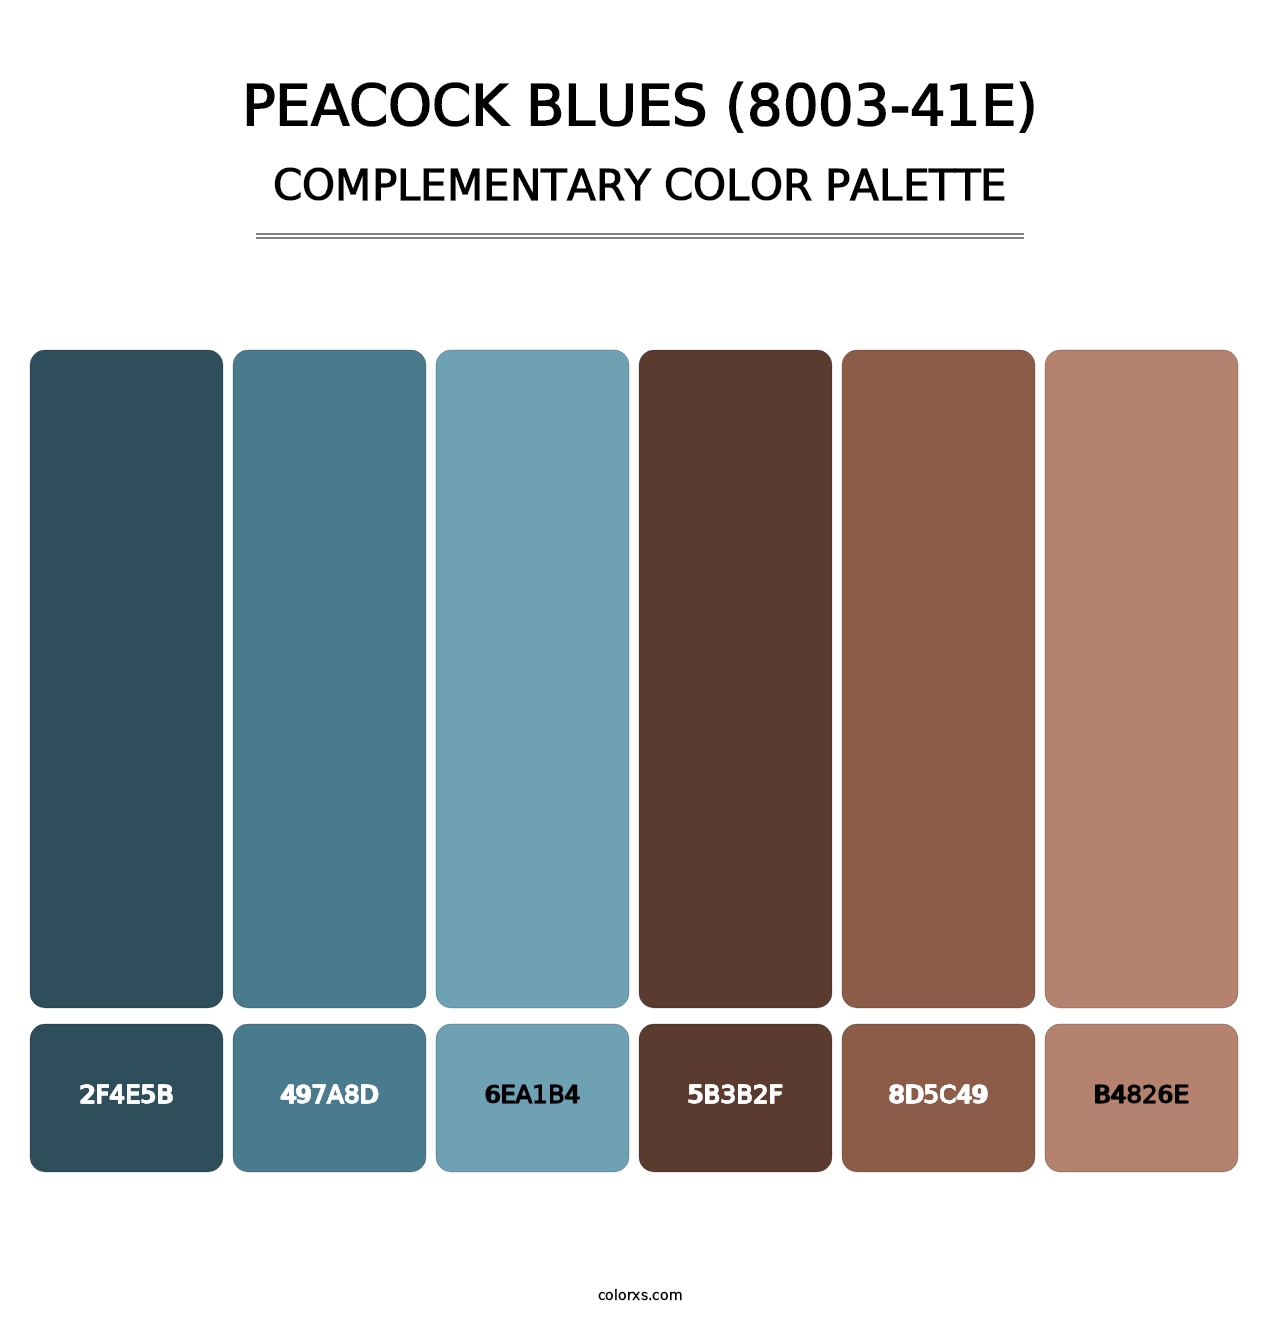 Peacock Blues (8003-41E) - Complementary Color Palette